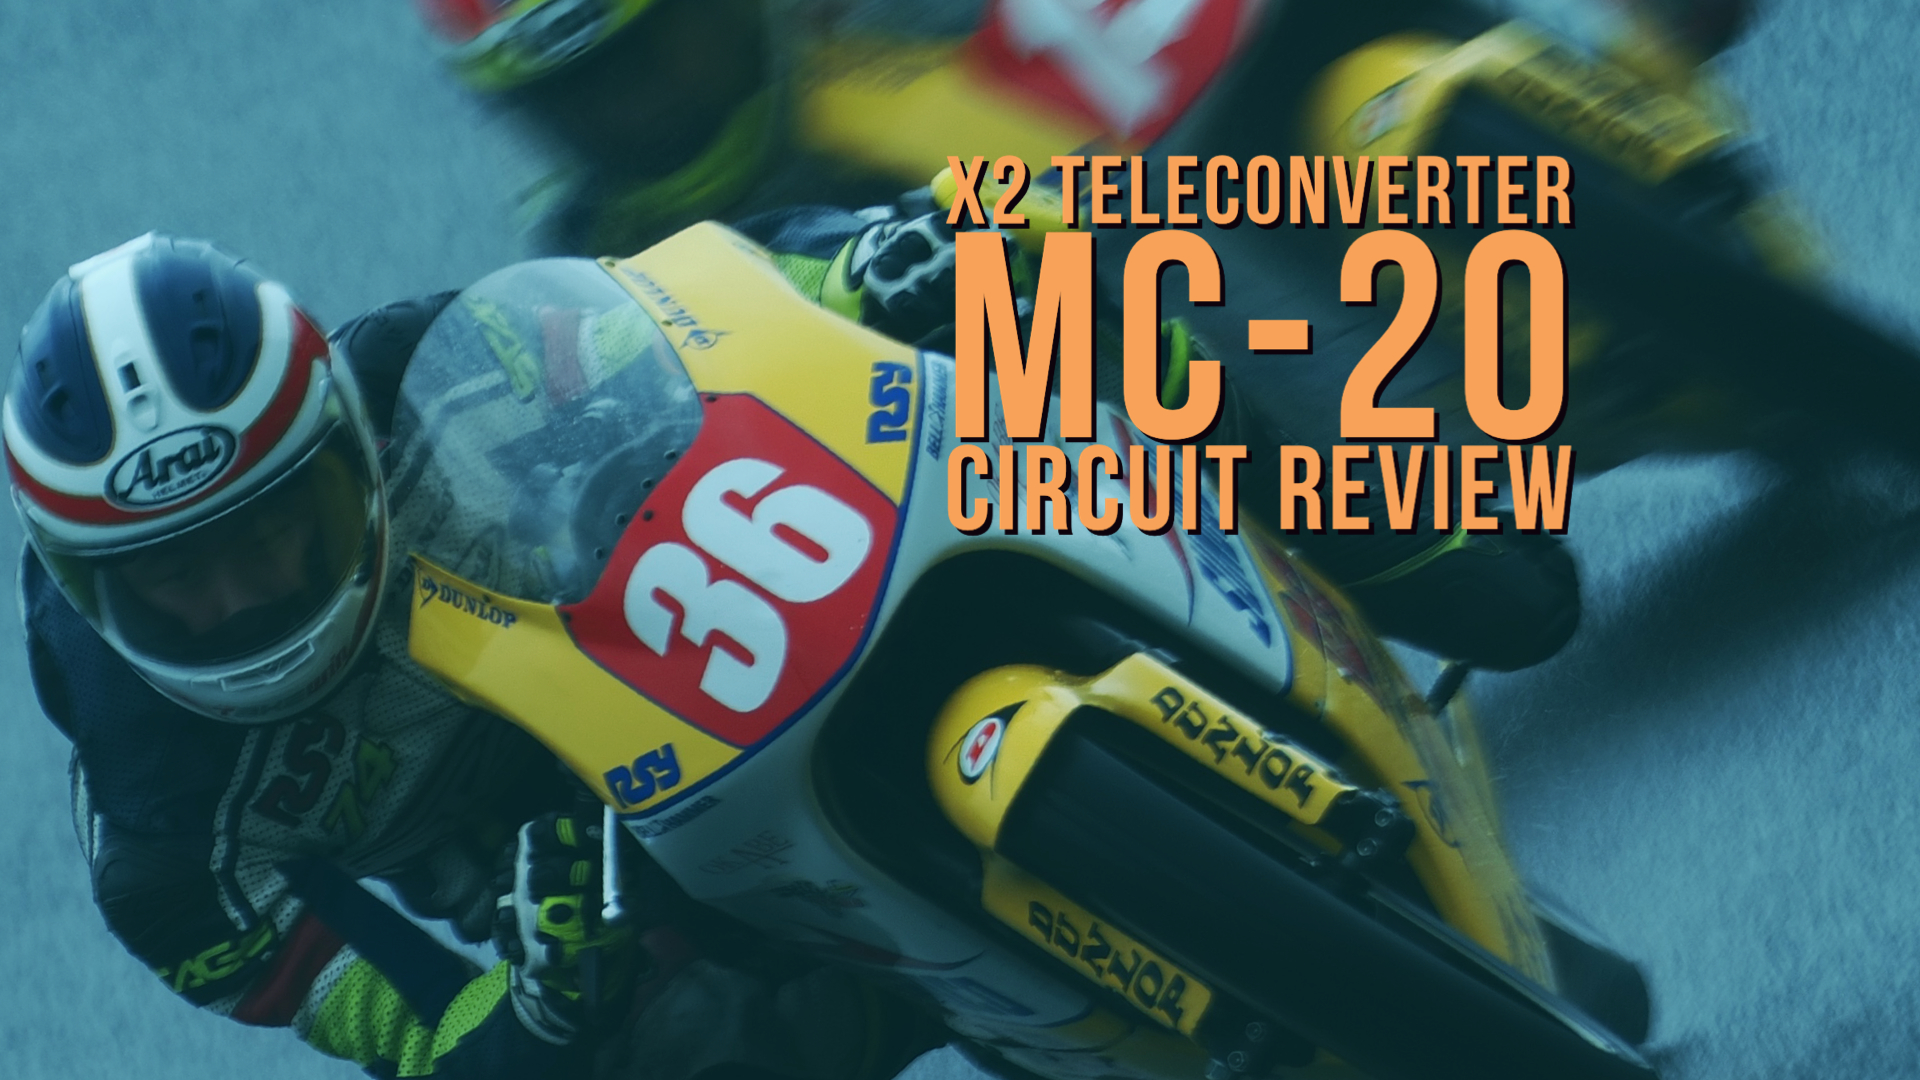 Teleconverter MEC-20 Circuit Review2